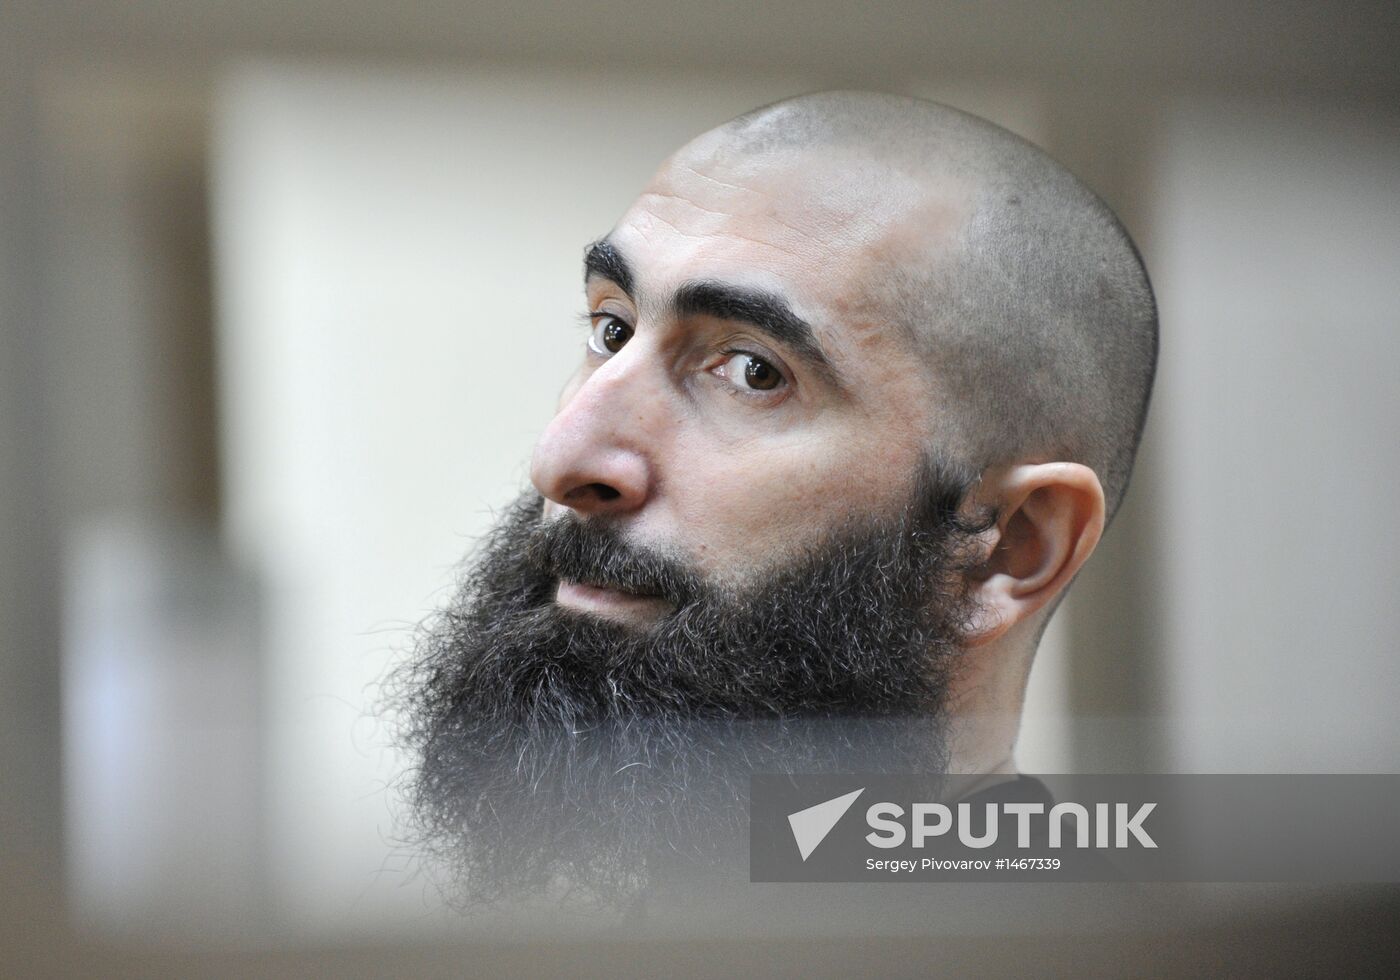 Court hearing of terrorist Ali Taziyev's case